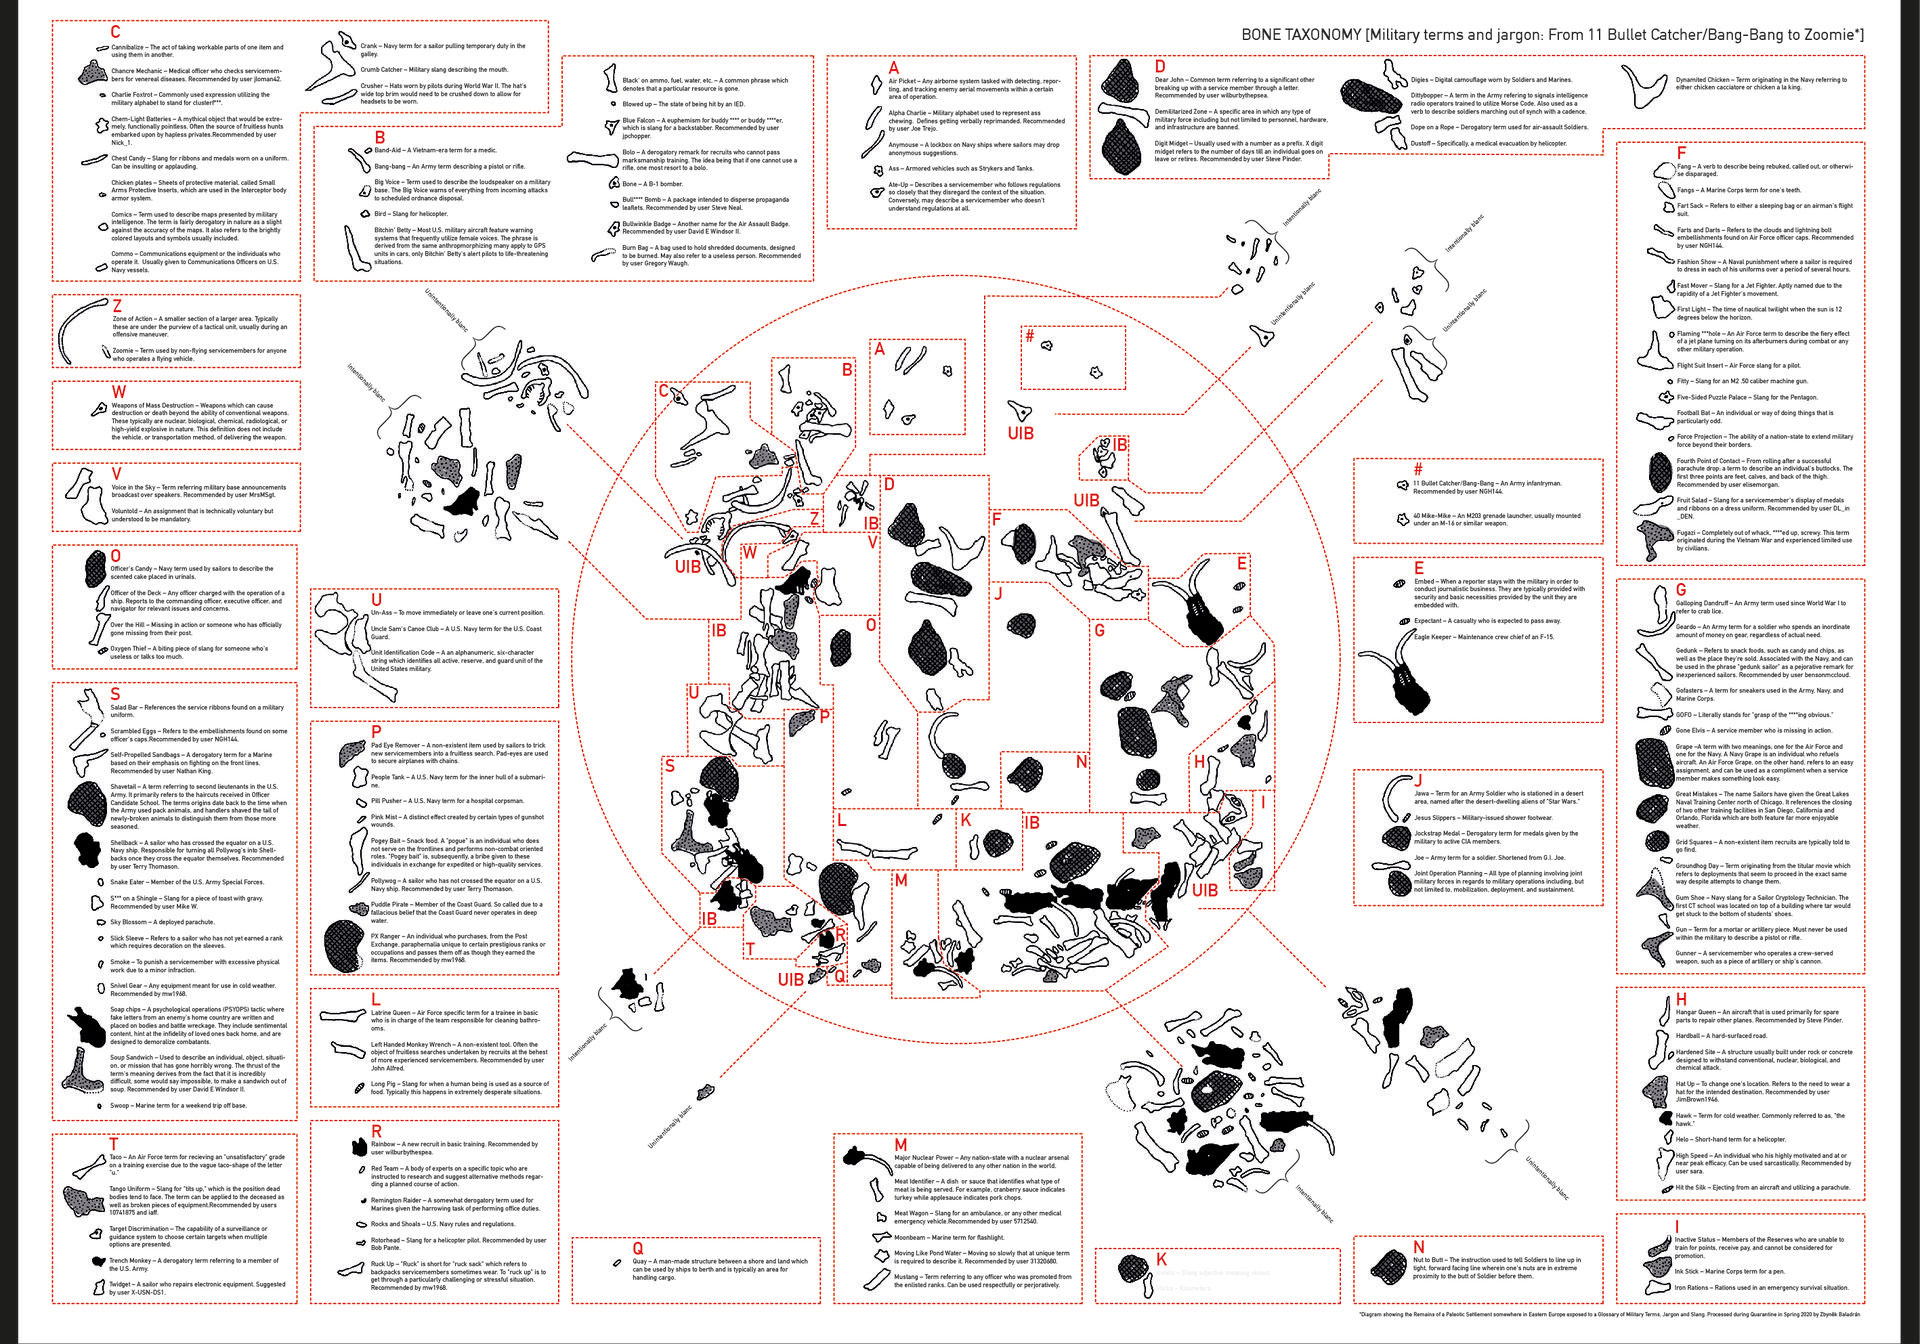 Zbyněk Baladrán, Taxonomy of bones, 2020, stampa su cartone, 70x100 cm, courtesy l’artista